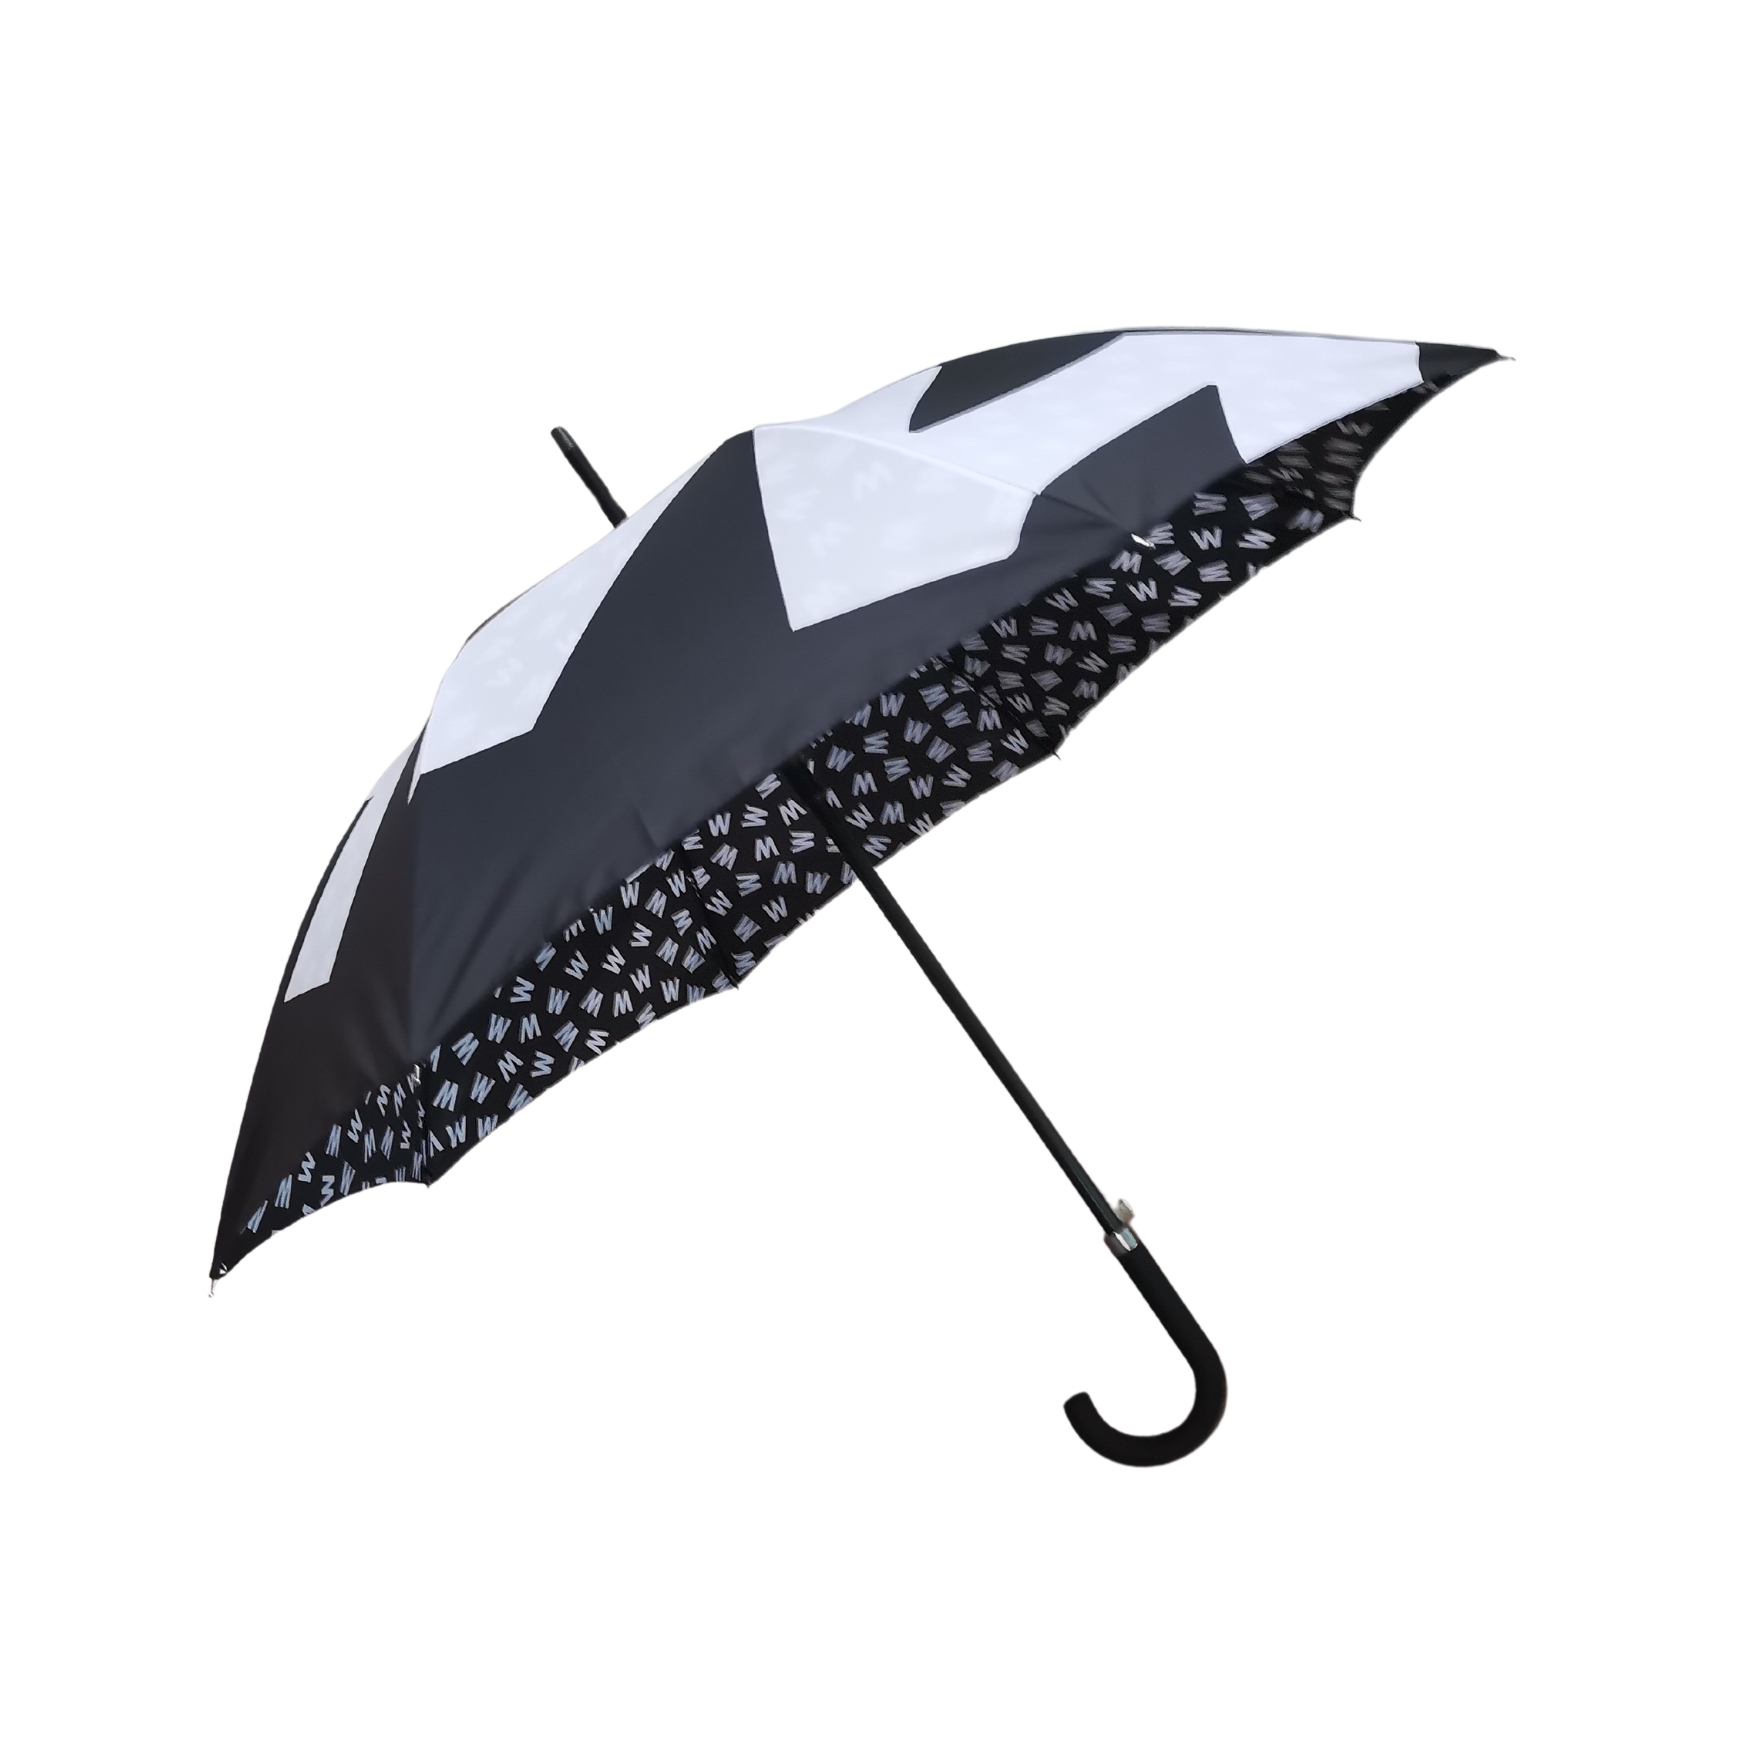 Custom Walker Pro Double Canopy Umbrella